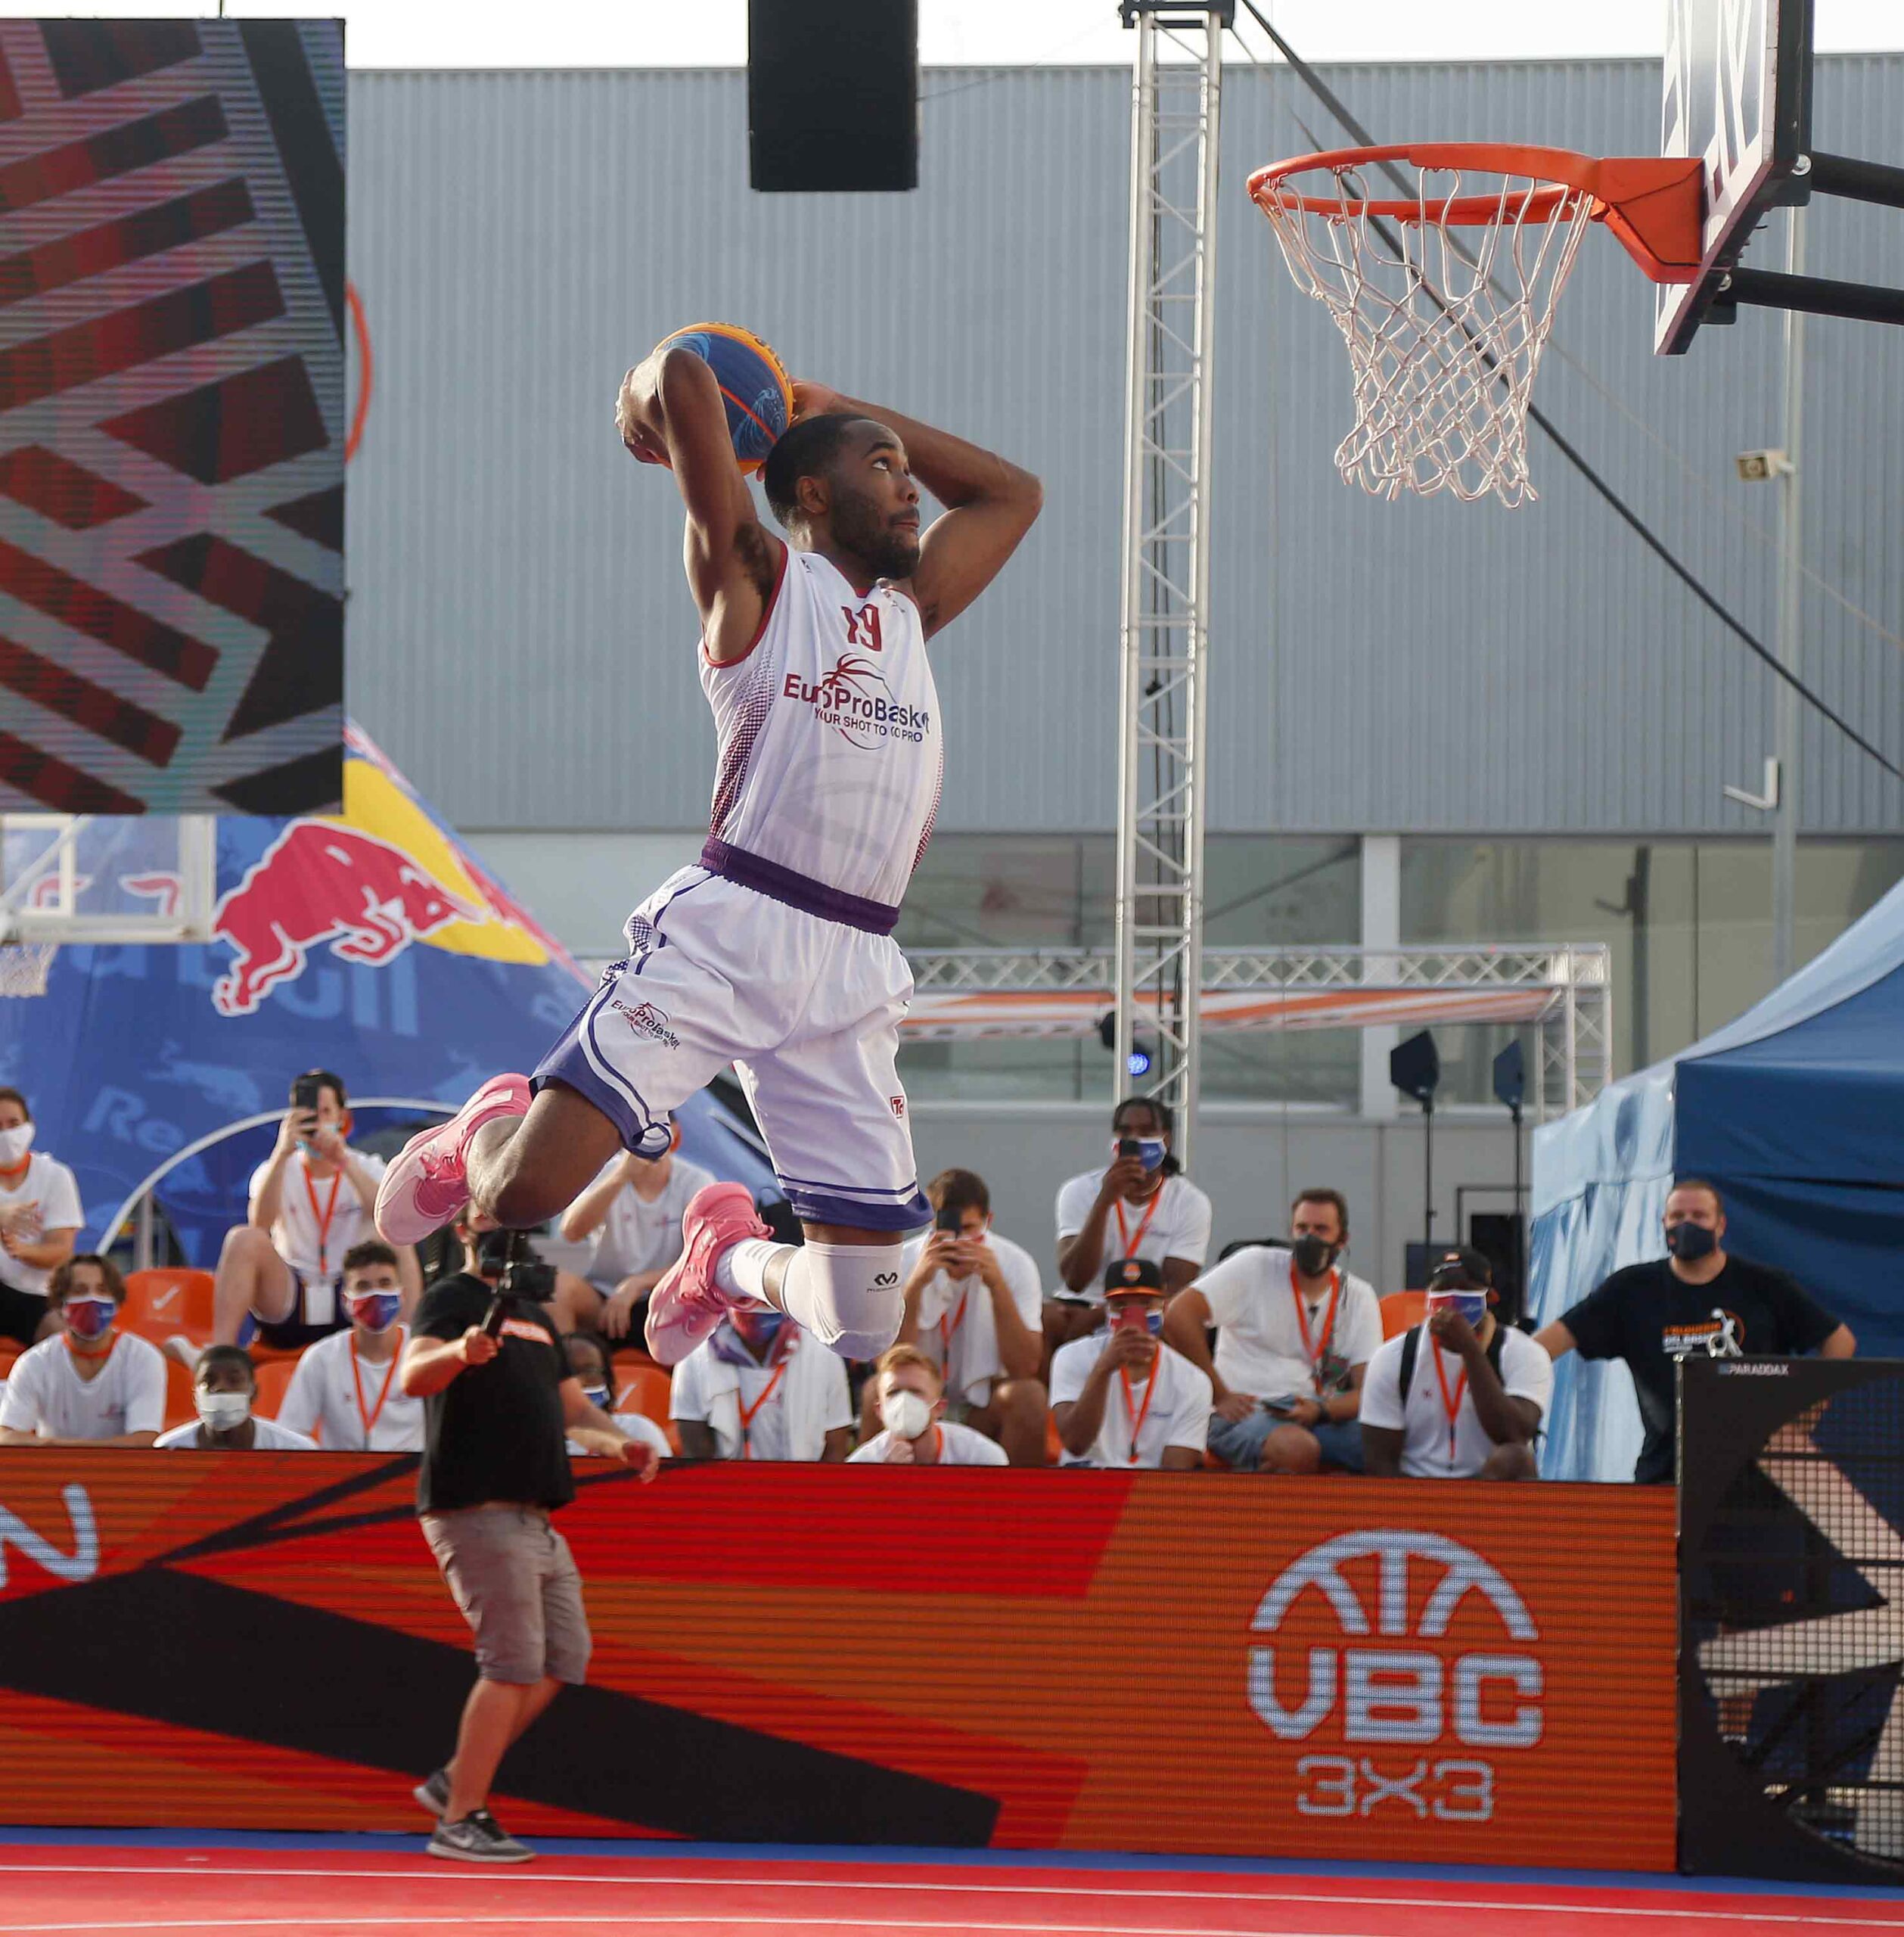 Jason Bady Europrobasket dunk